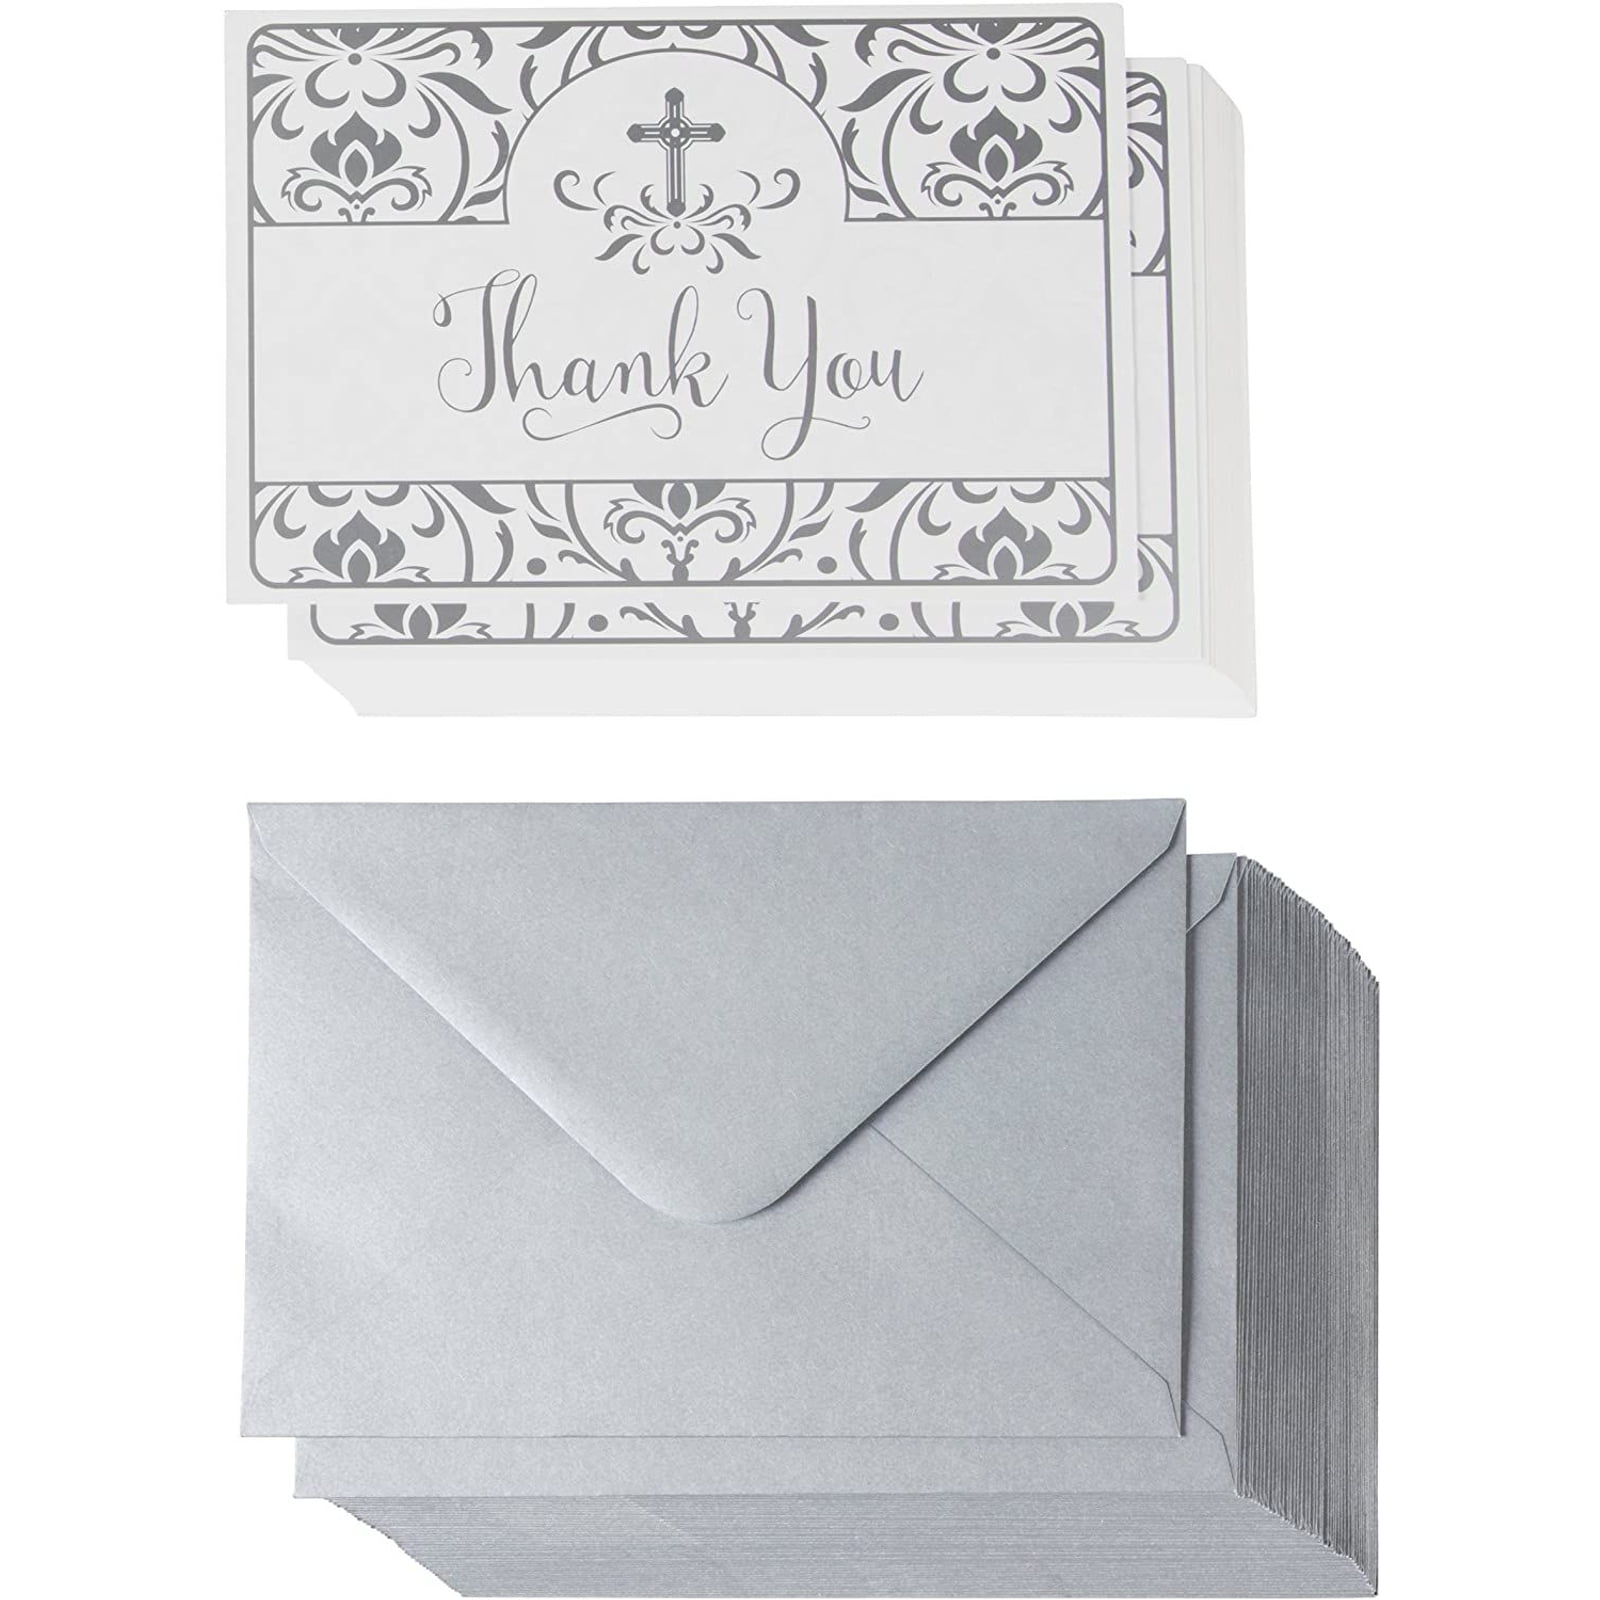 60 Pcs Envelopes Reusable Fashion Storage Envolopes for Business Cards Postcards 